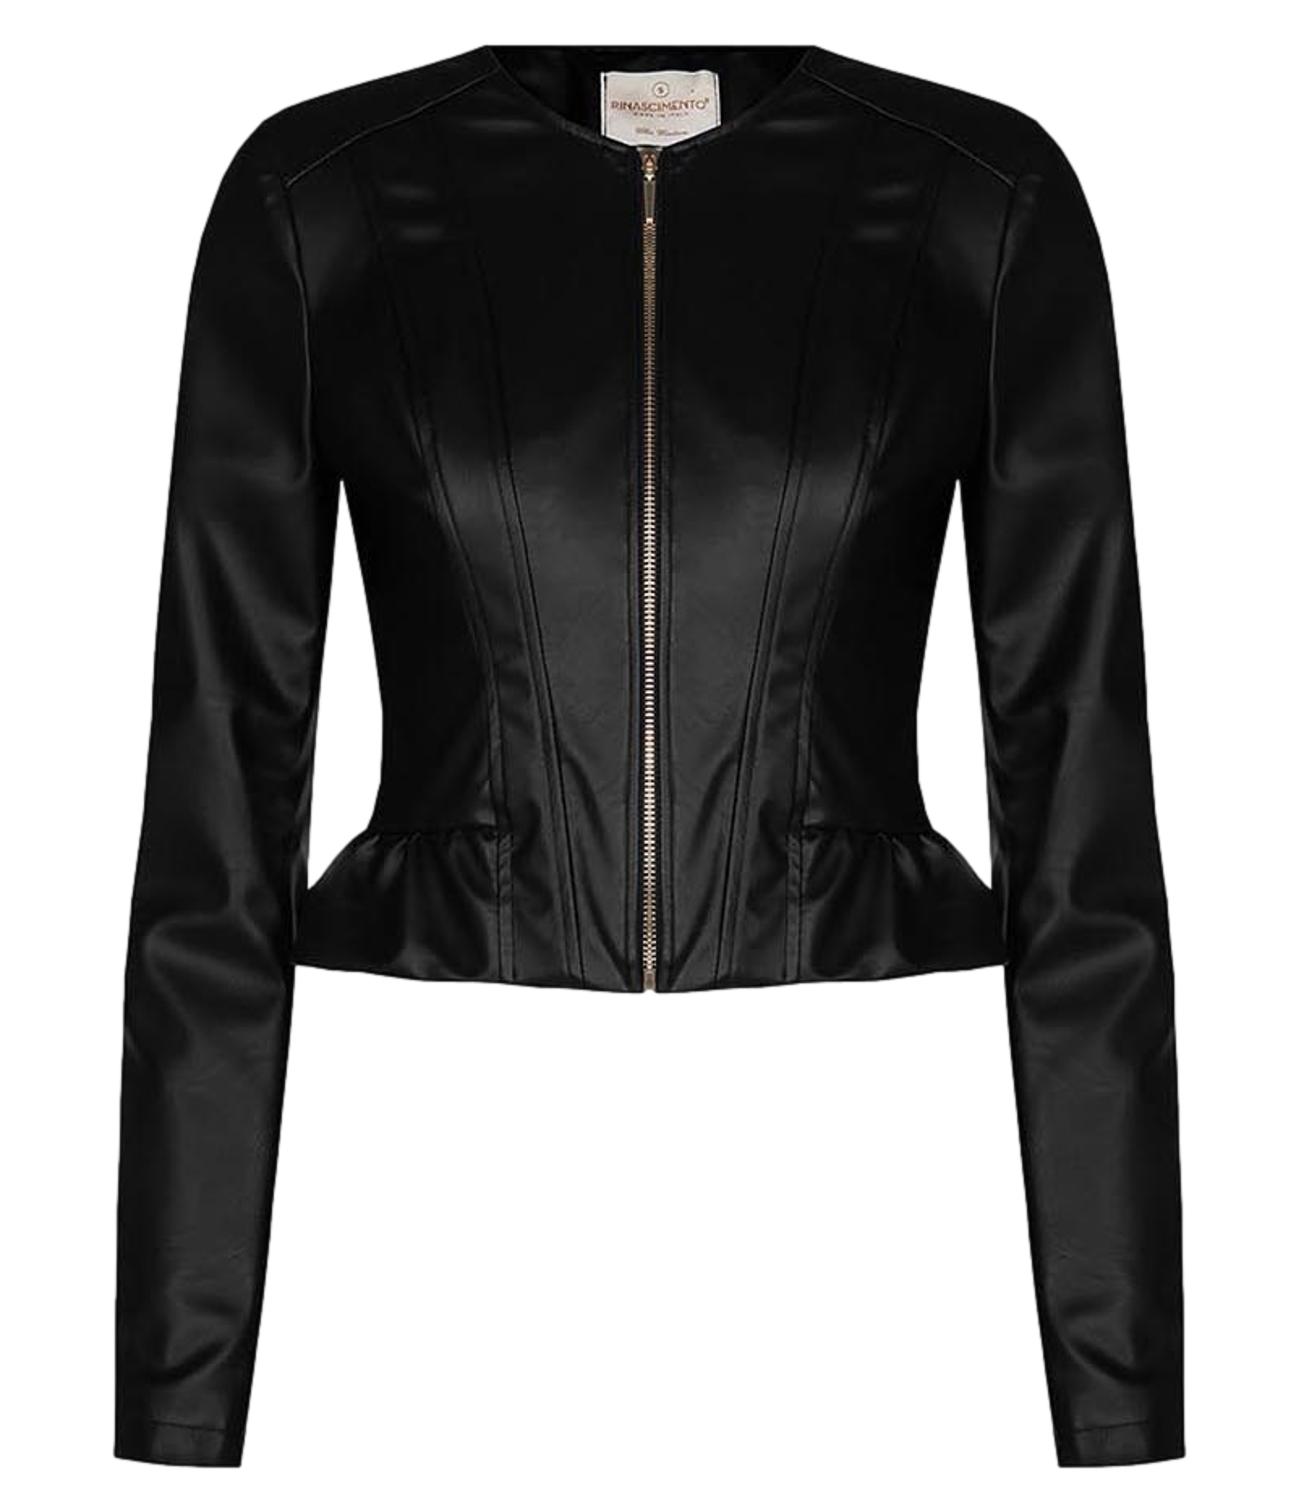 RINASCAMENTO Women's black leather jacket